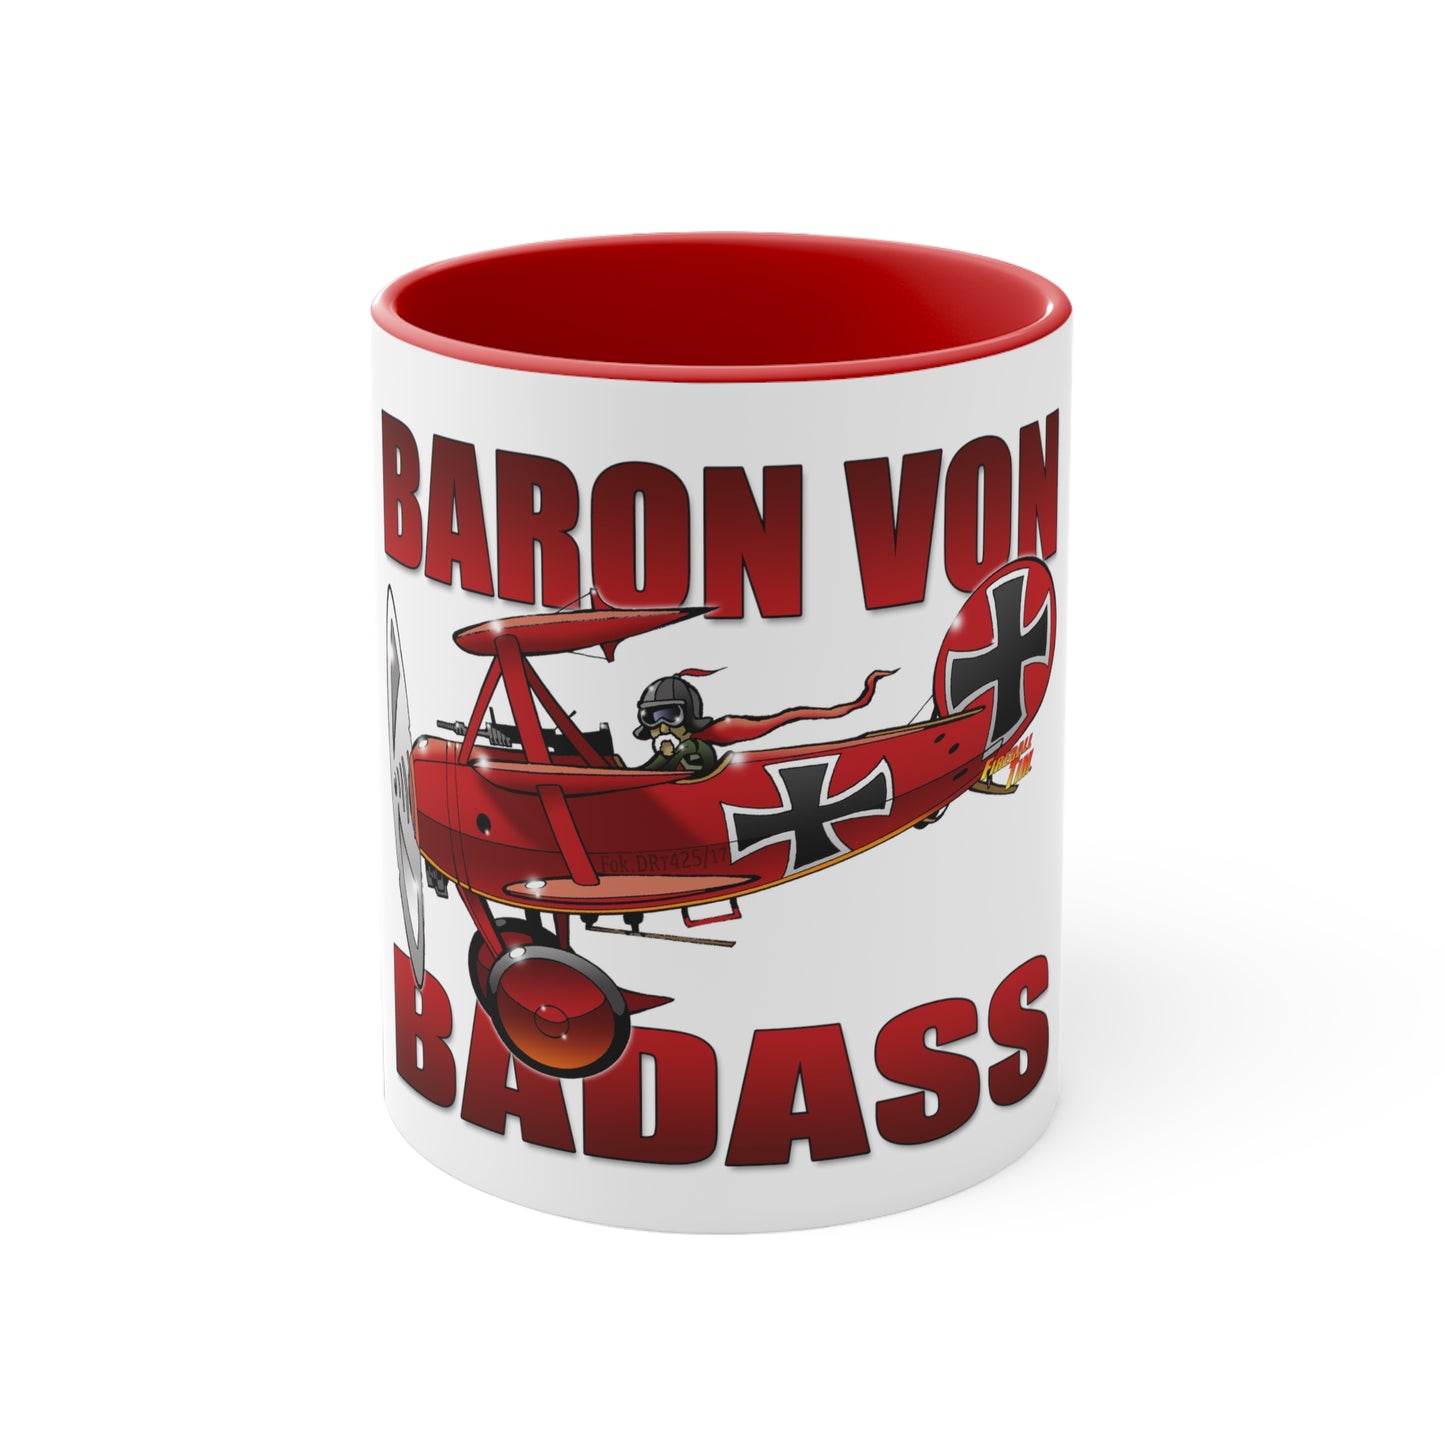 BARON VON BADASS Red Baron Airplane Coffee Mug 11oz